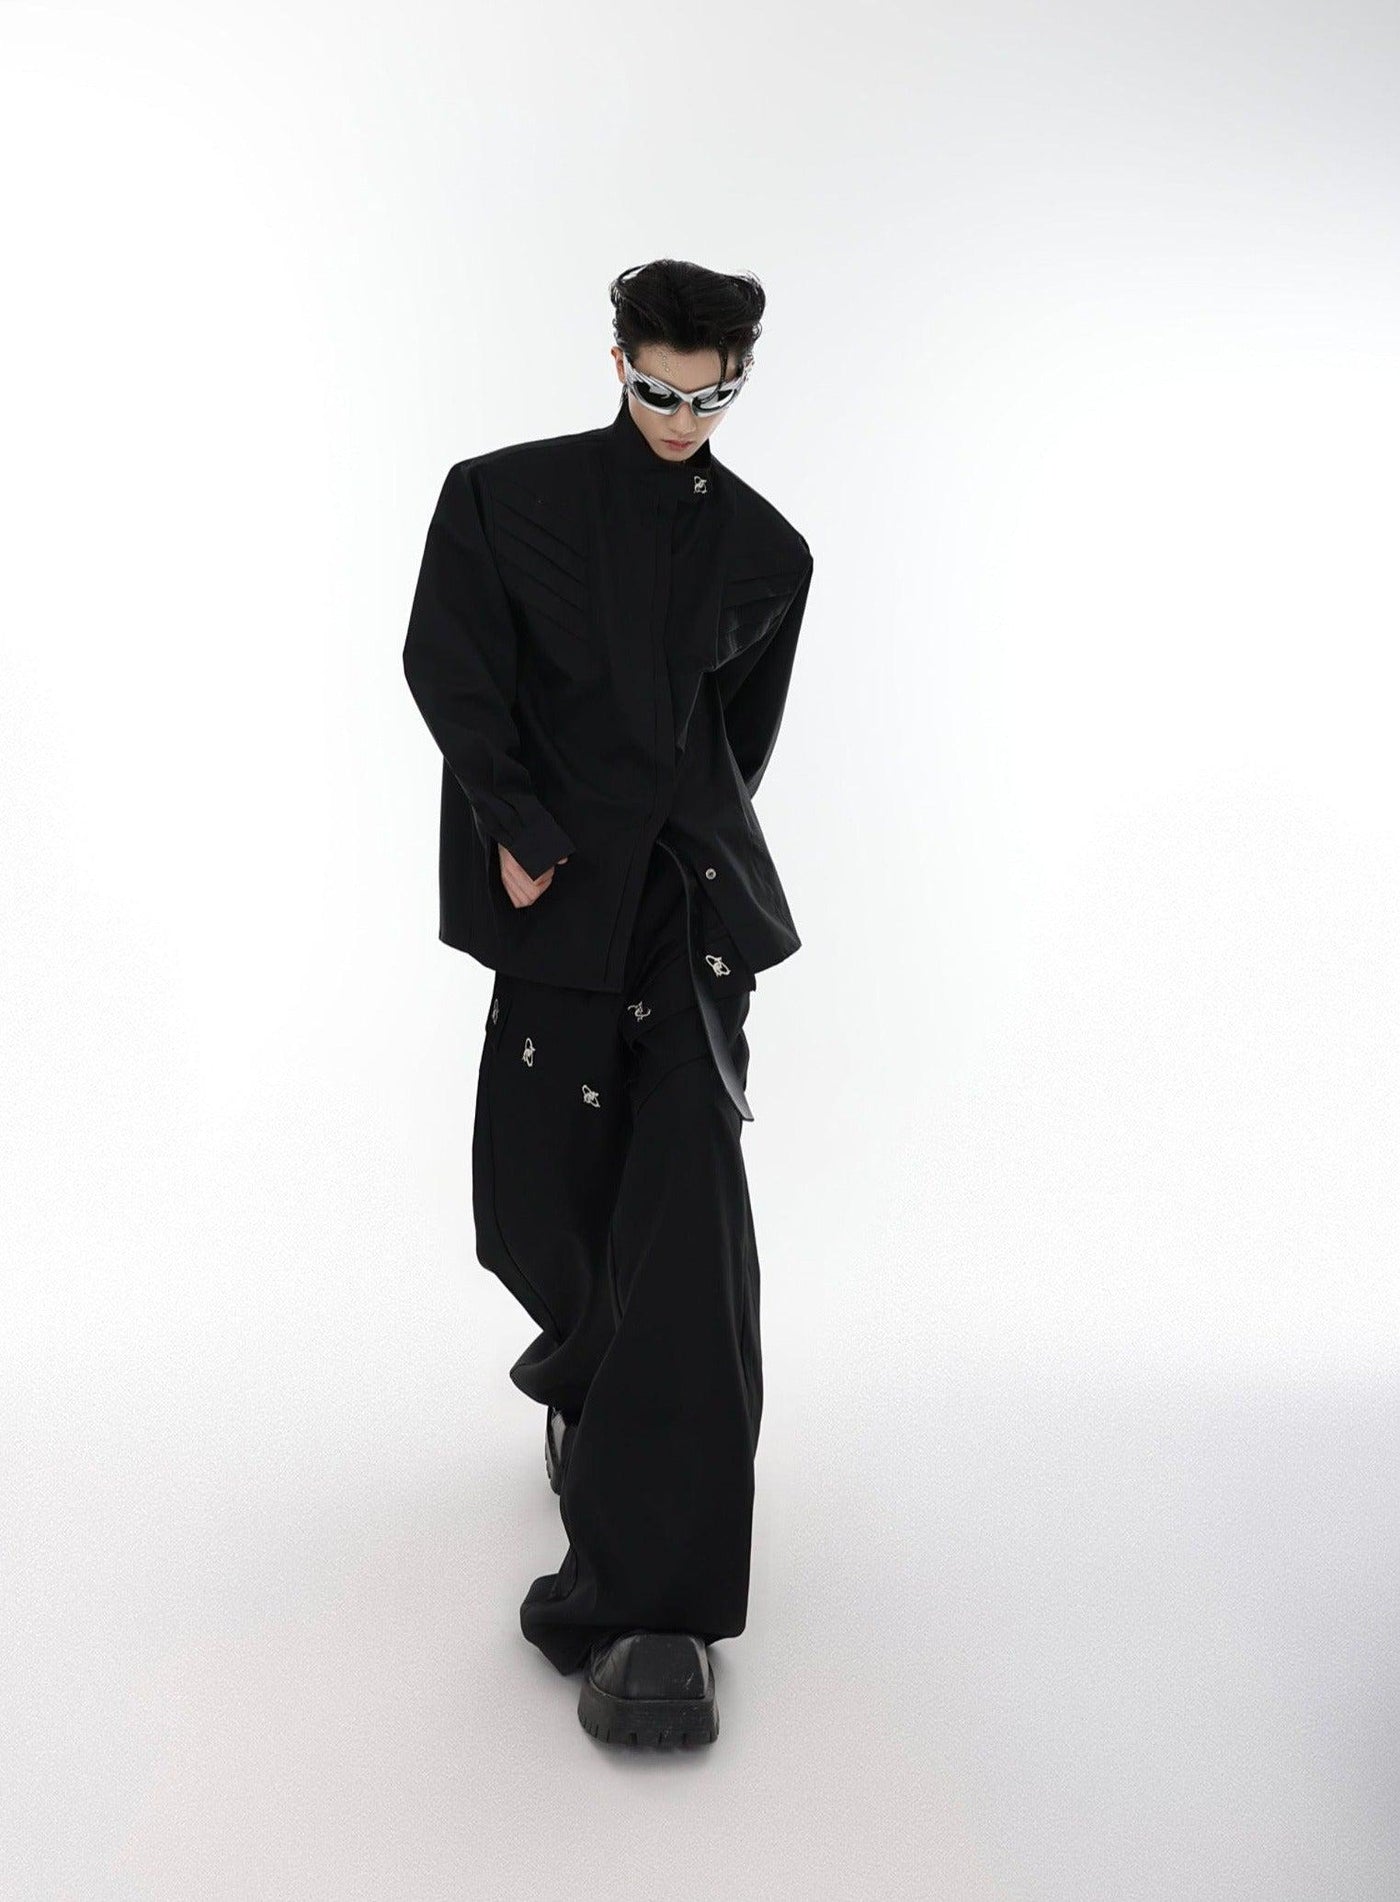 Metallic Stand Collar Long Sleeve Shirt Korean Street Fashion Shirt By Argue Culture Shop Online at OH Vault